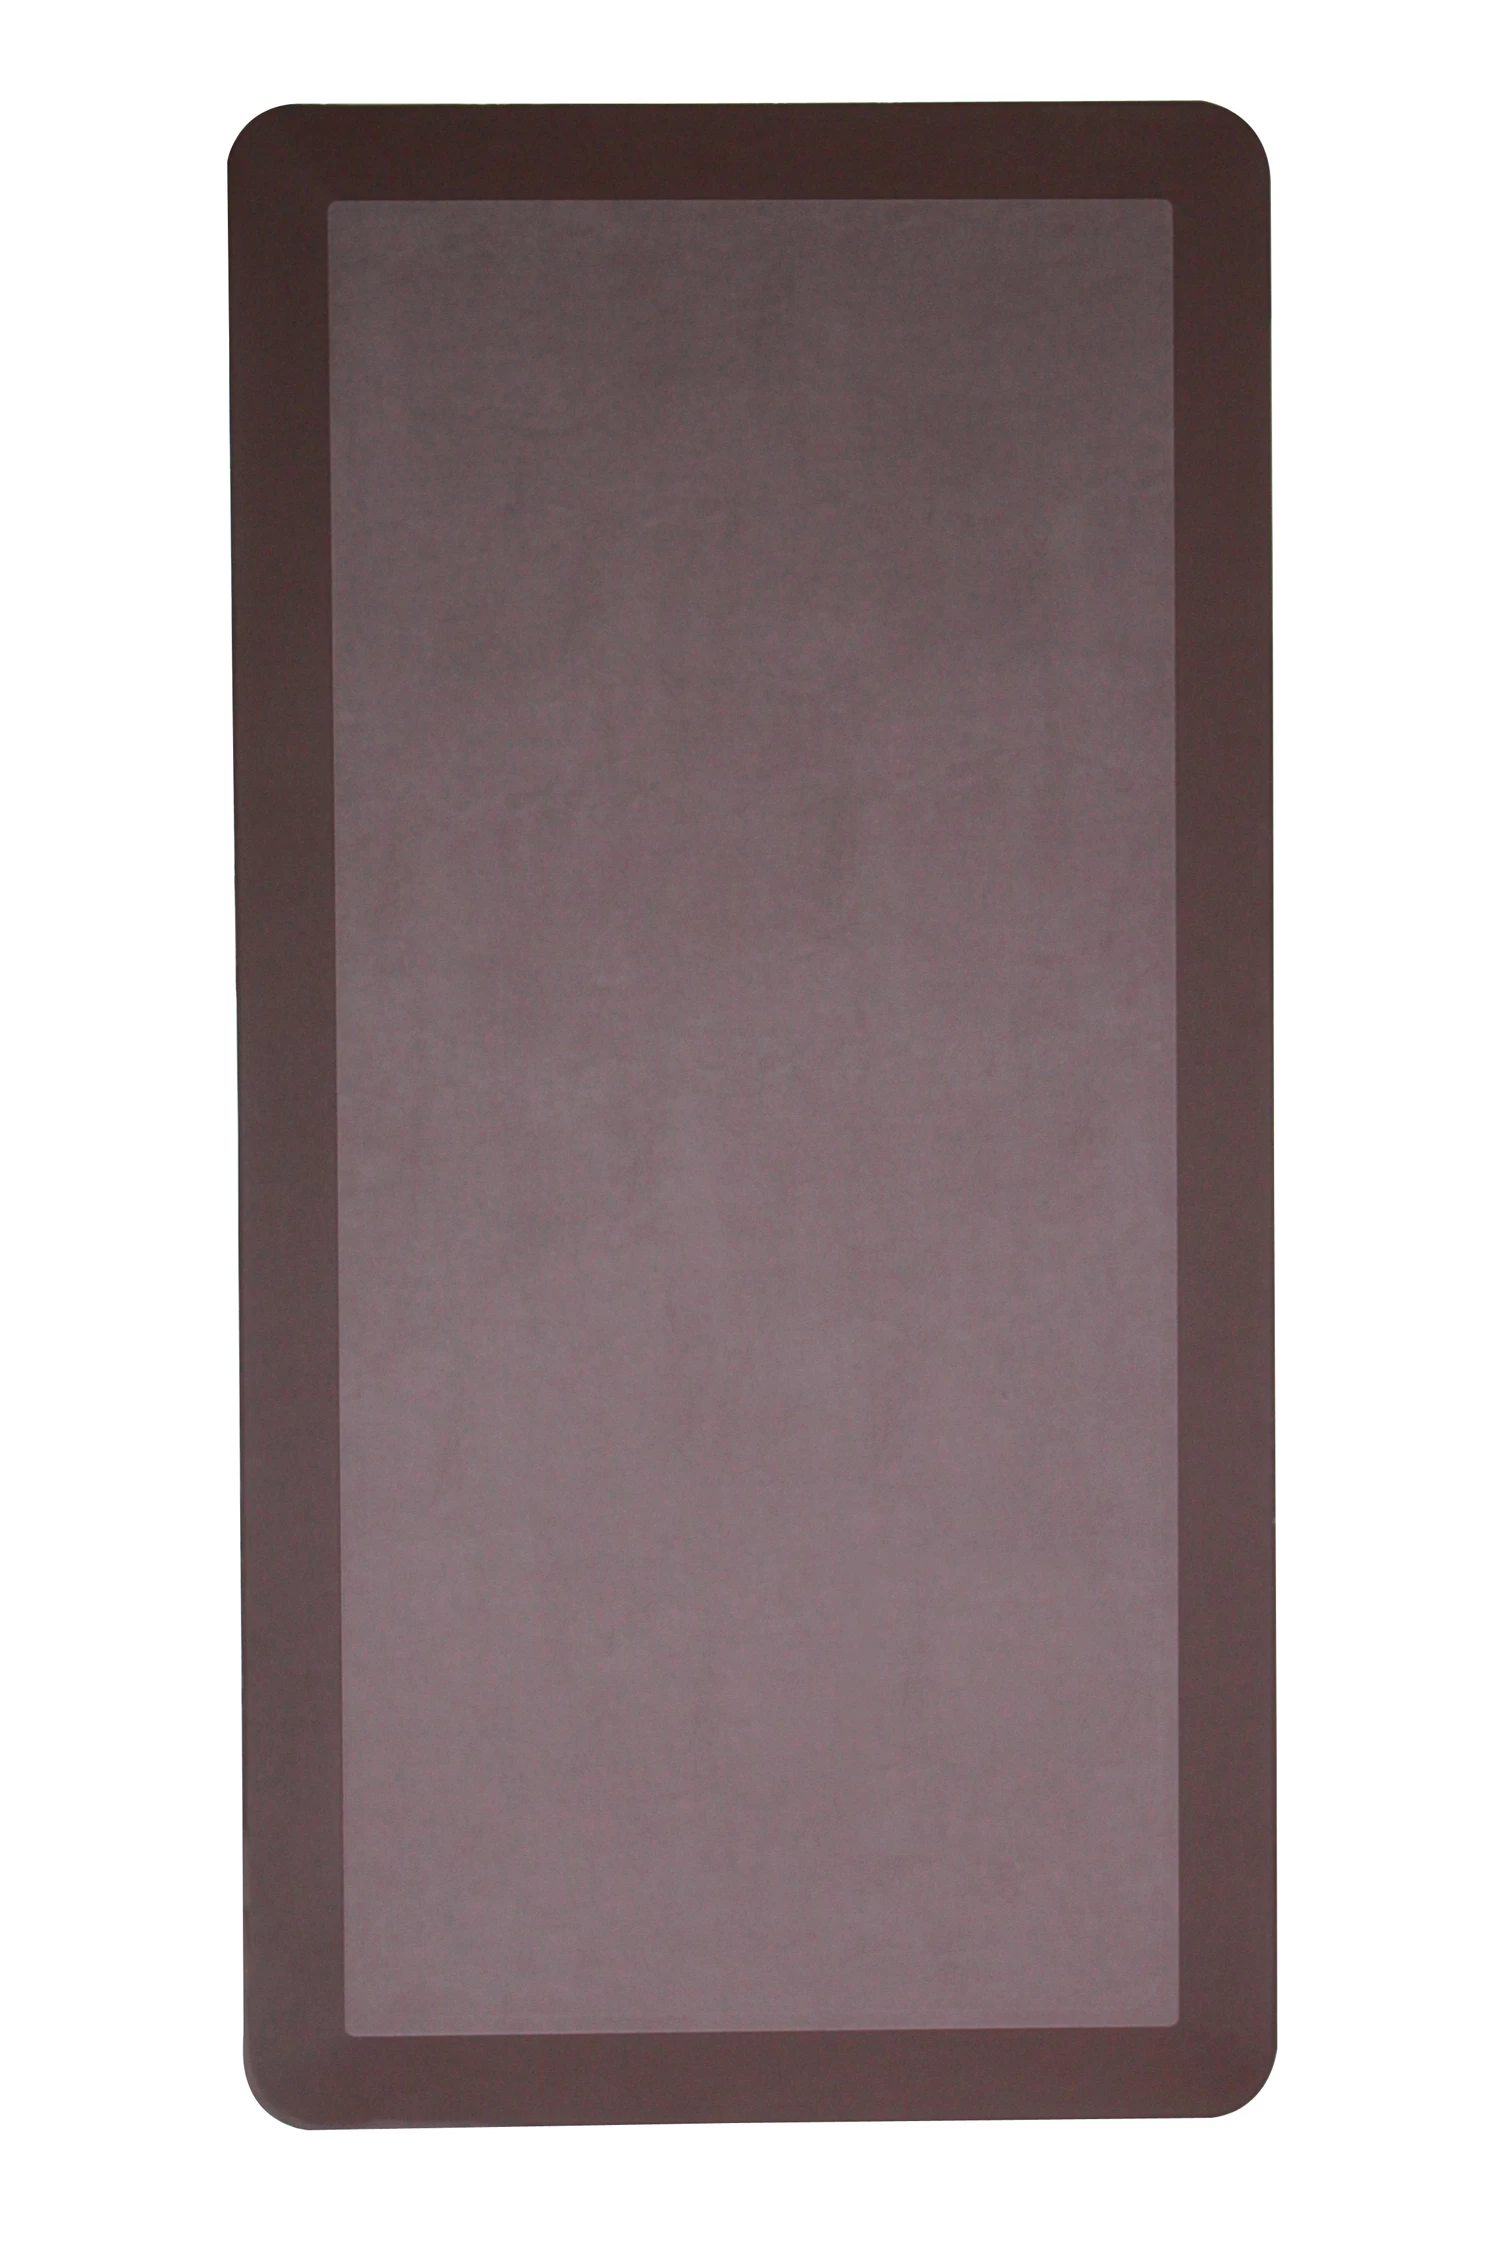 pvc floor mat,pvc mat, PVC leather kitchen mat, PU cover leather standing mat